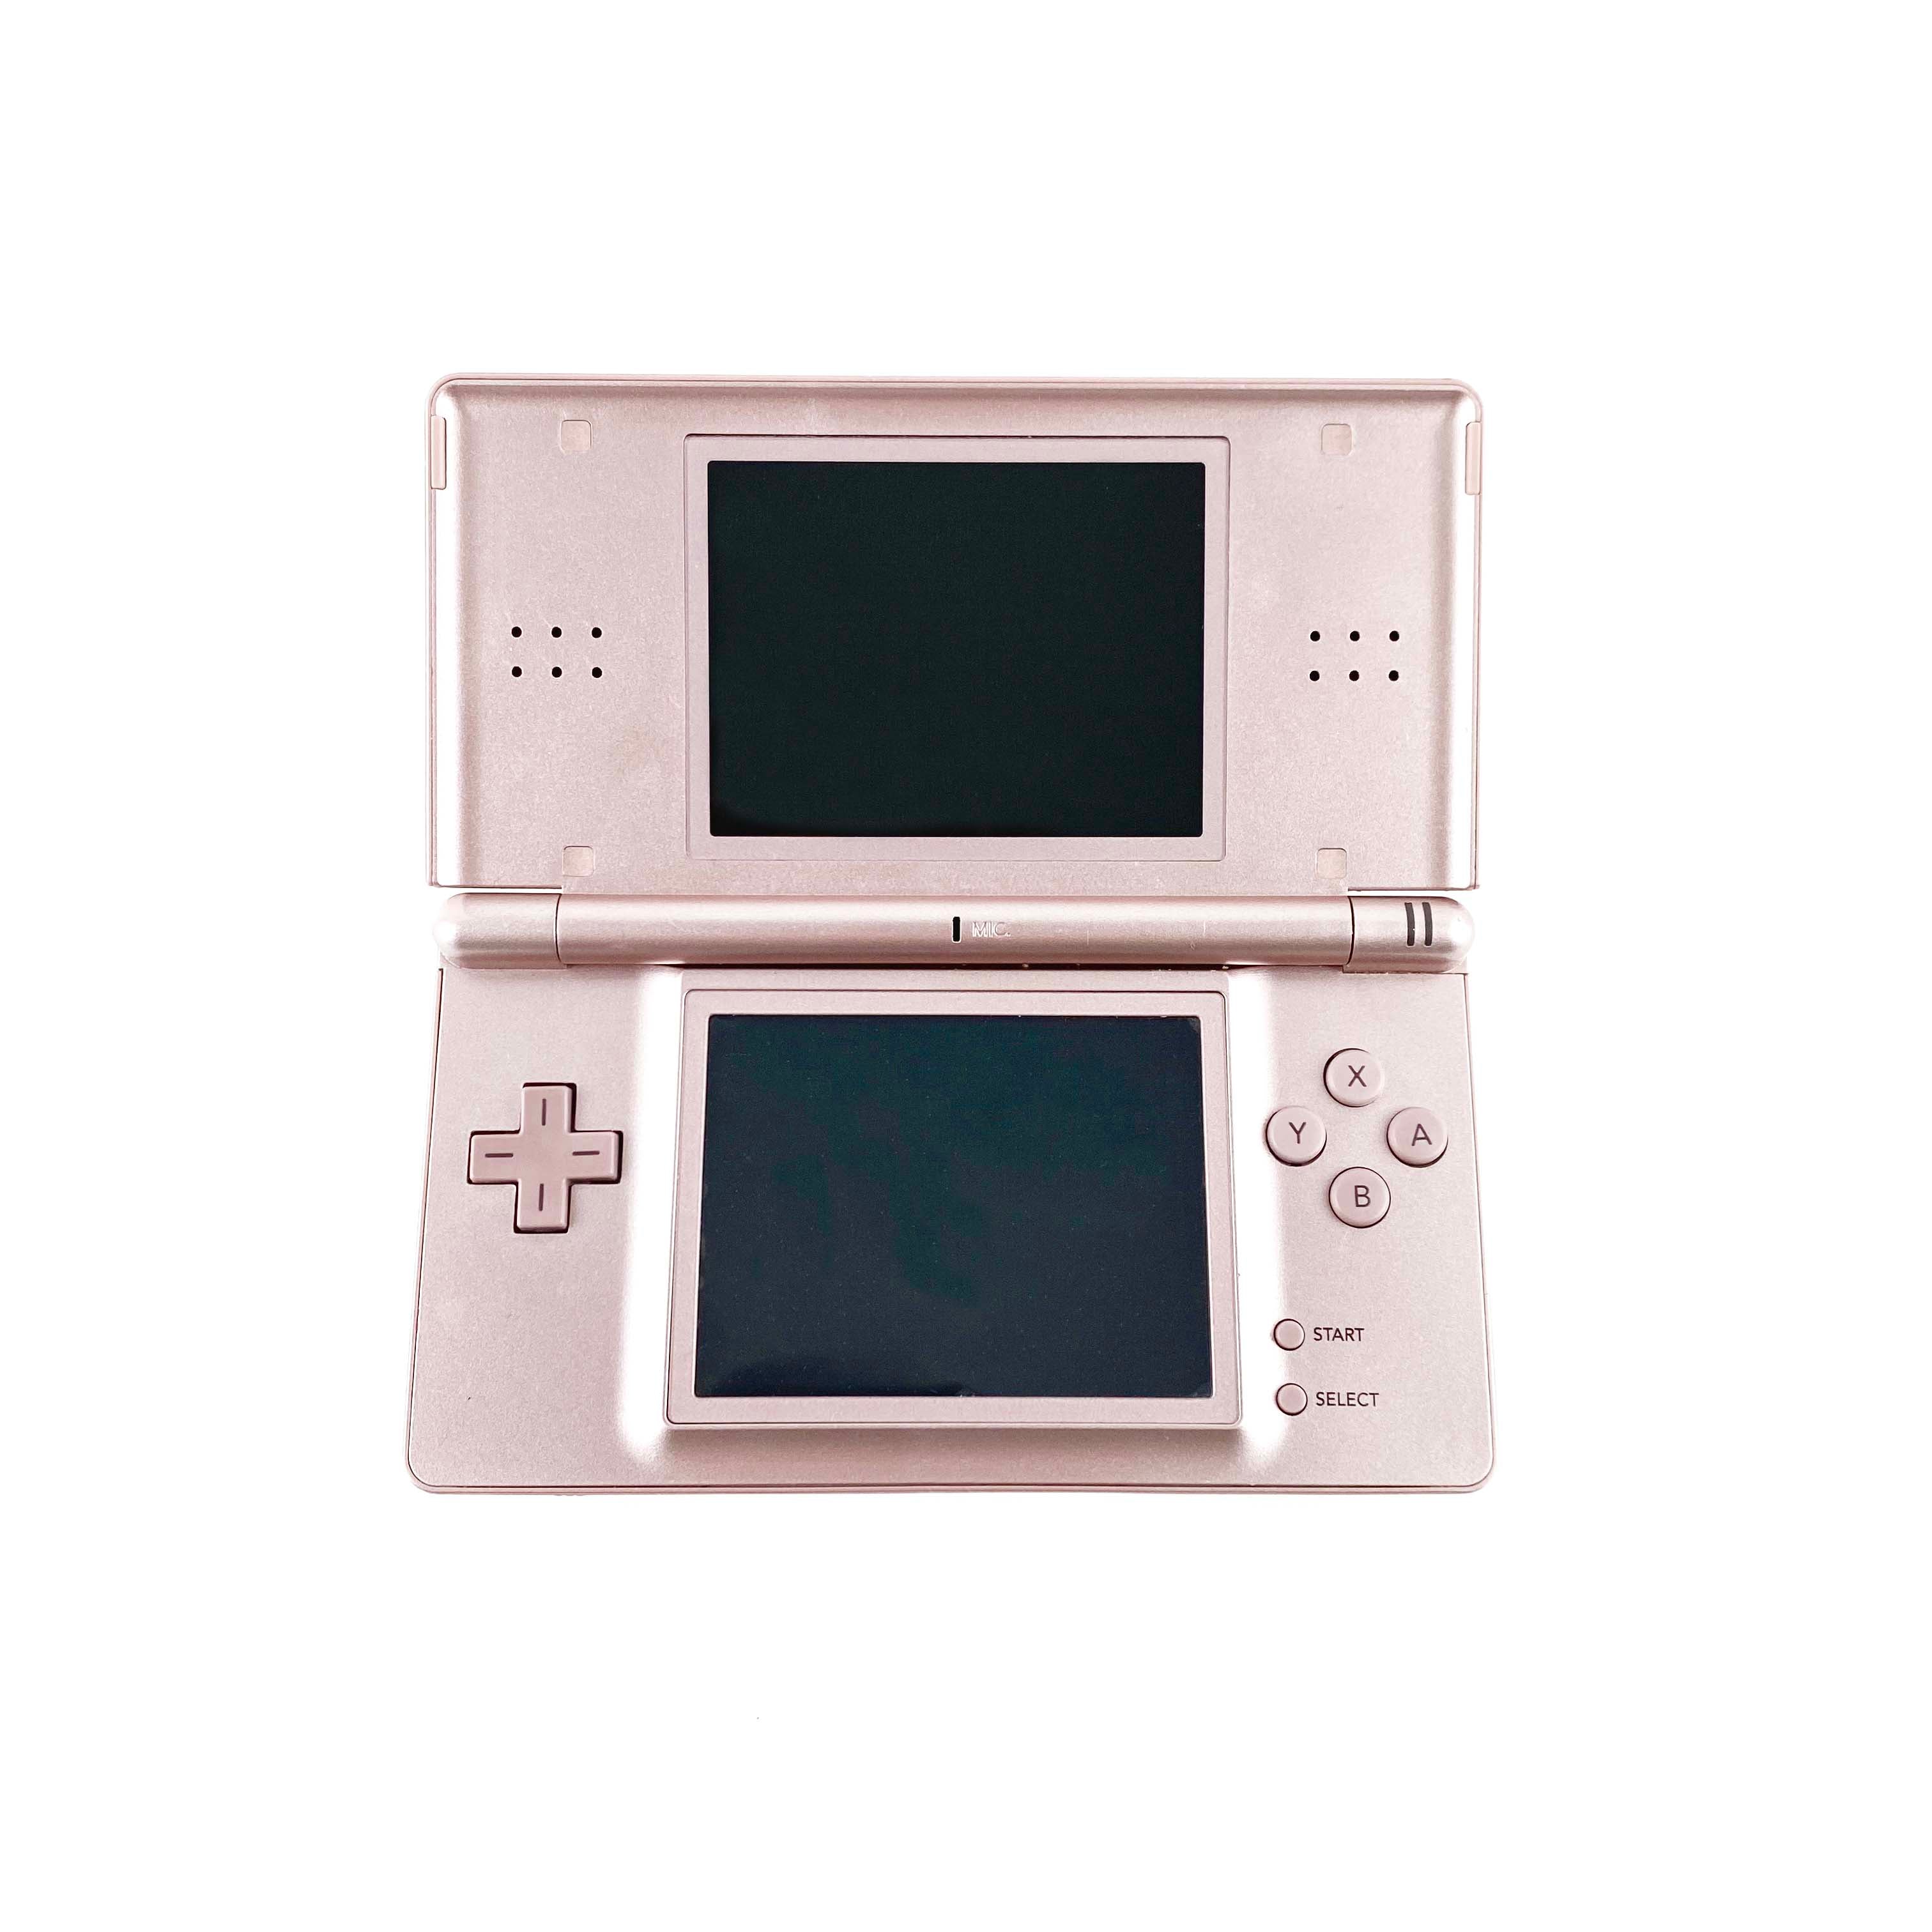 Nintendo DS Lite Nintendogs Best Friends Paw Edition Handheld Console (USG-001)